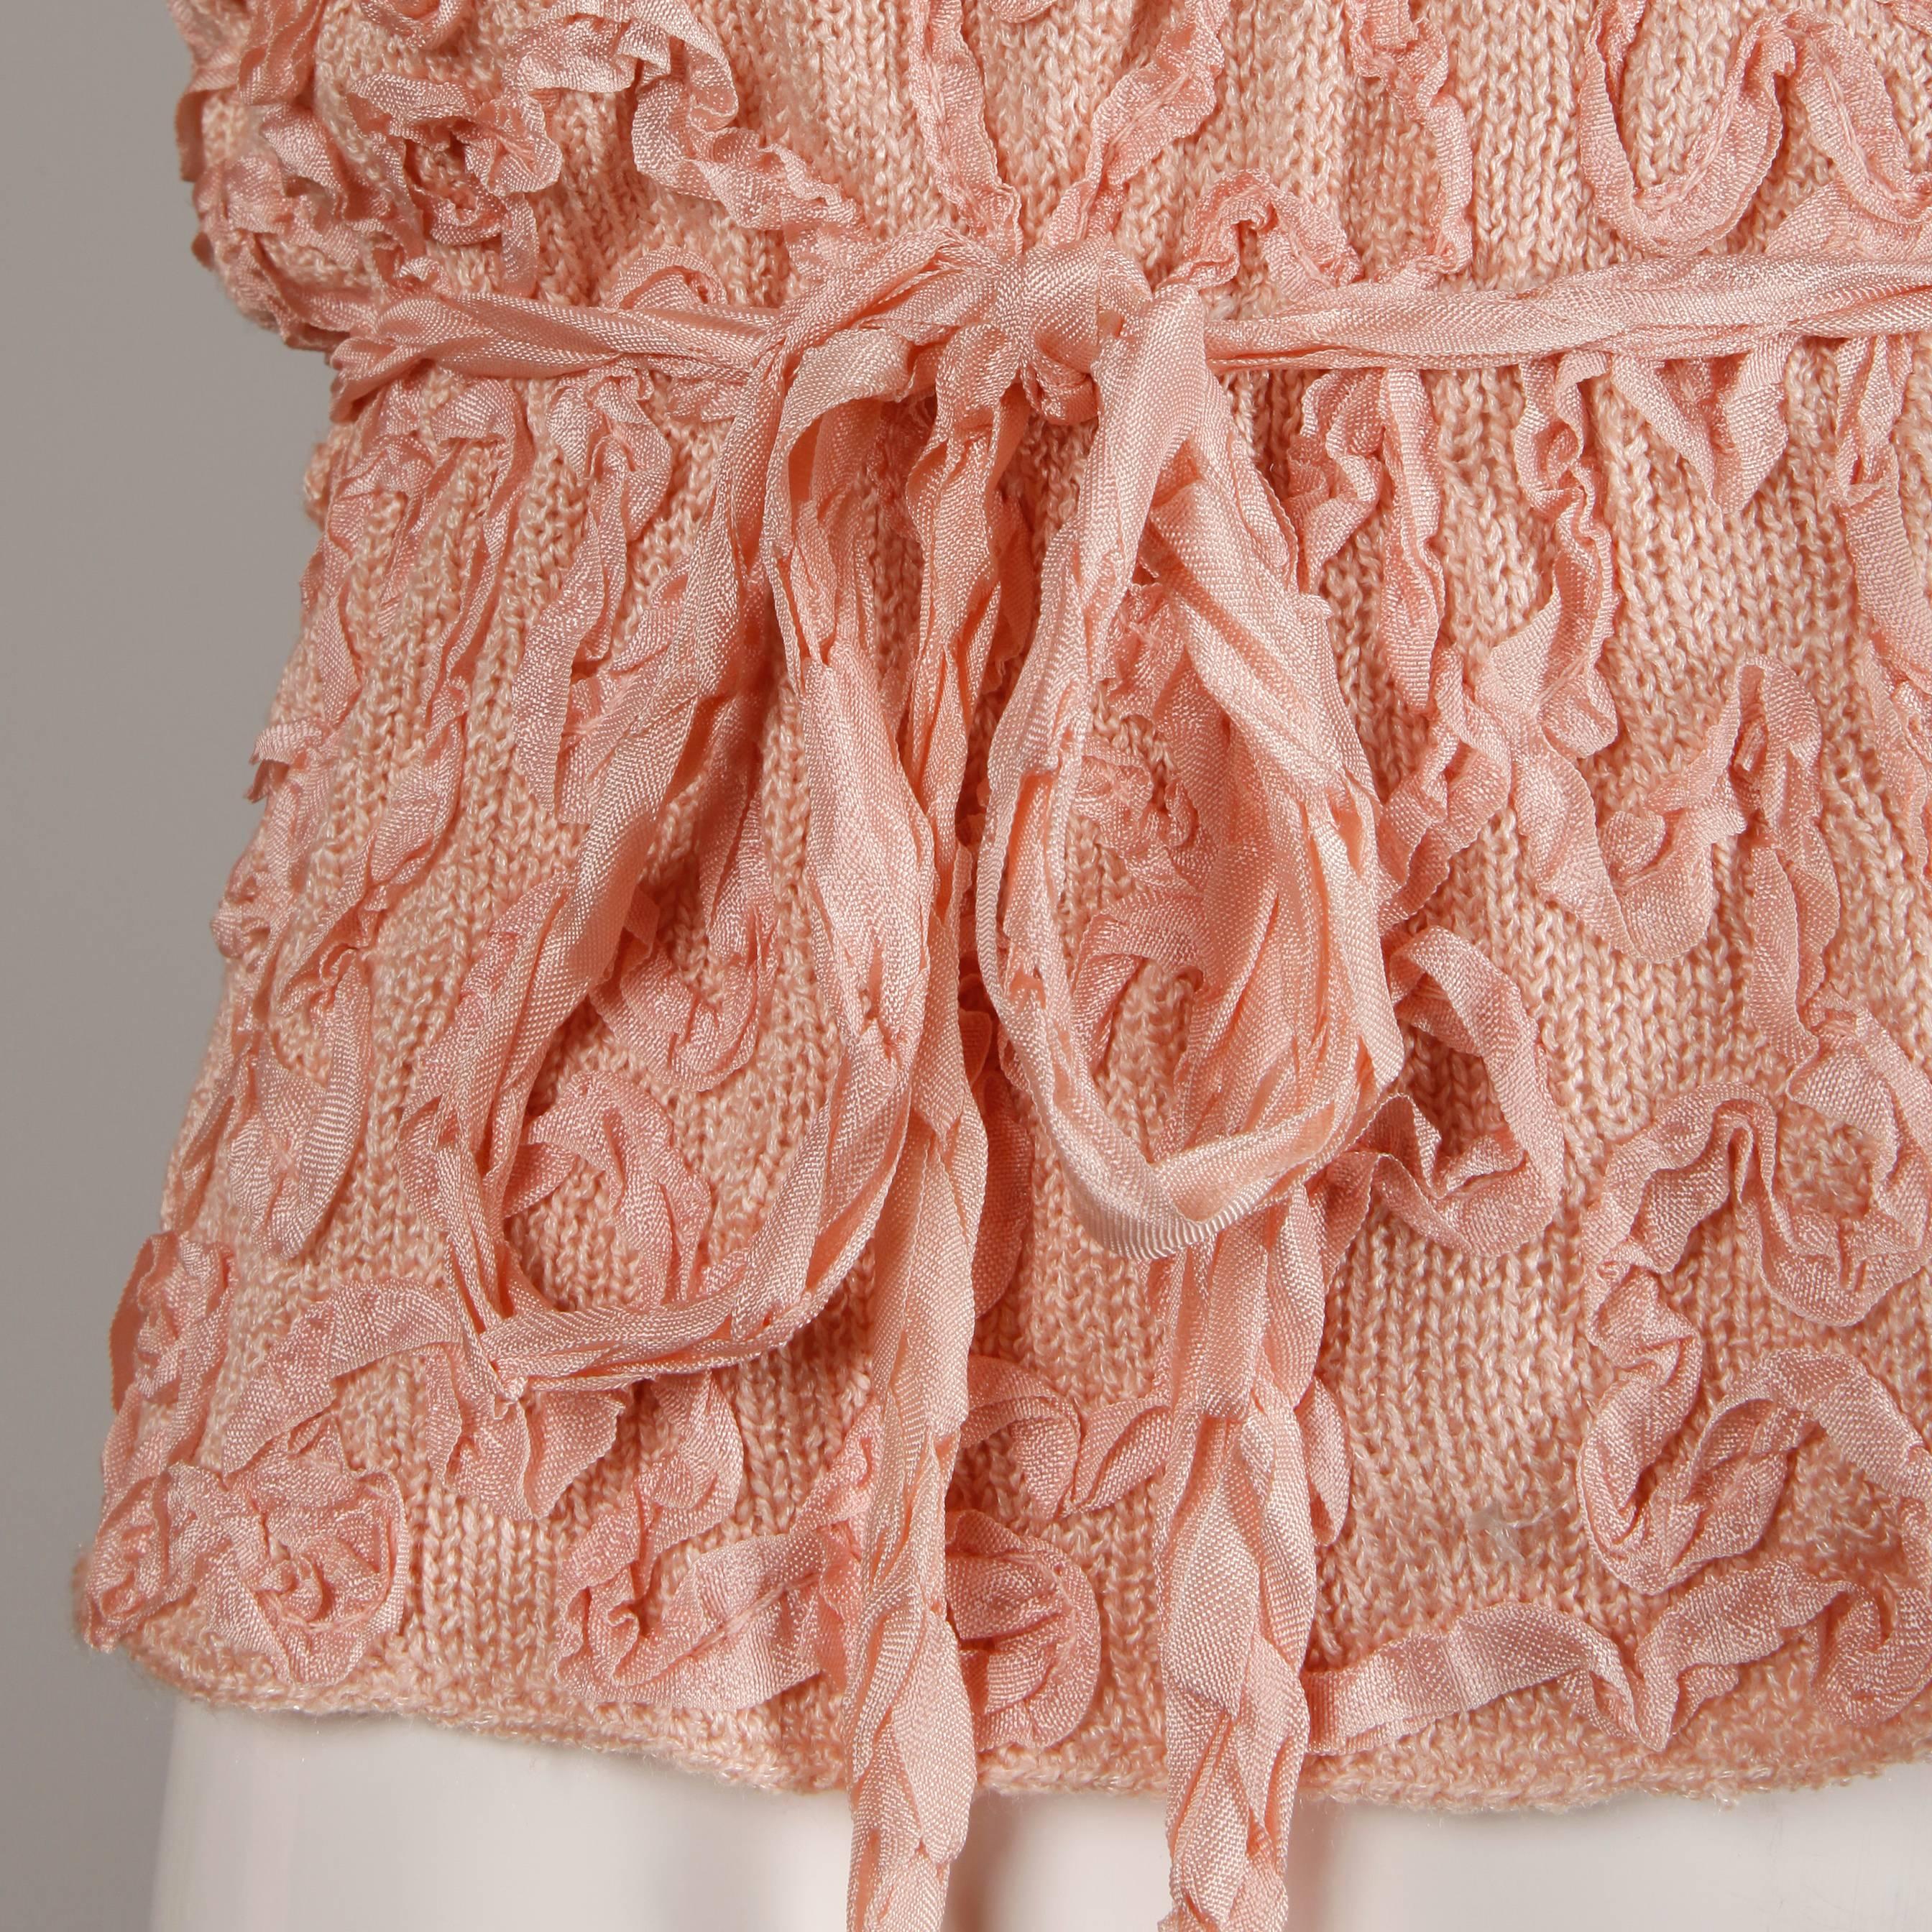 Women's 1970s Oscar de la Renta Vintage Pale Blush Pink Knit Soutache Sweater Top/ Shirt